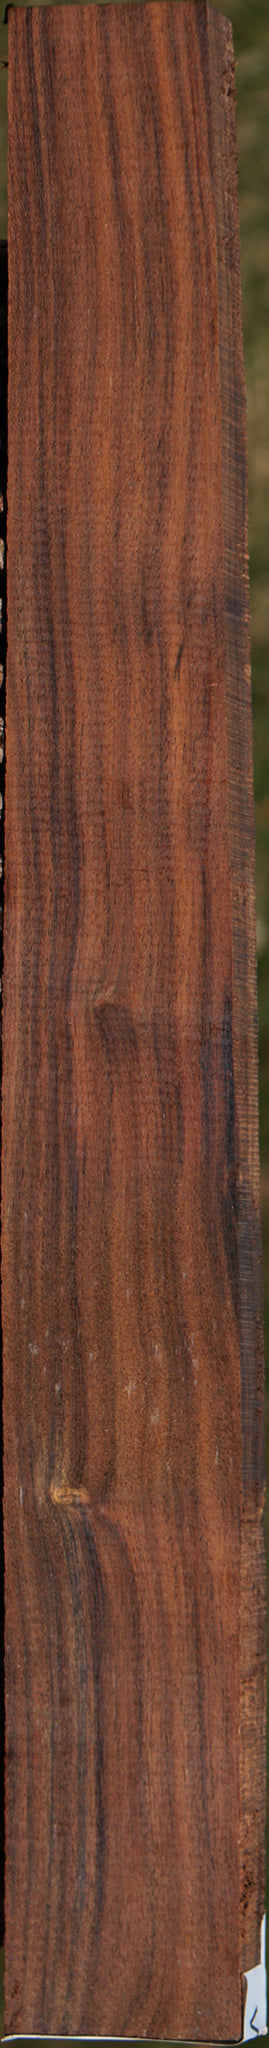 Leadwood Lumber